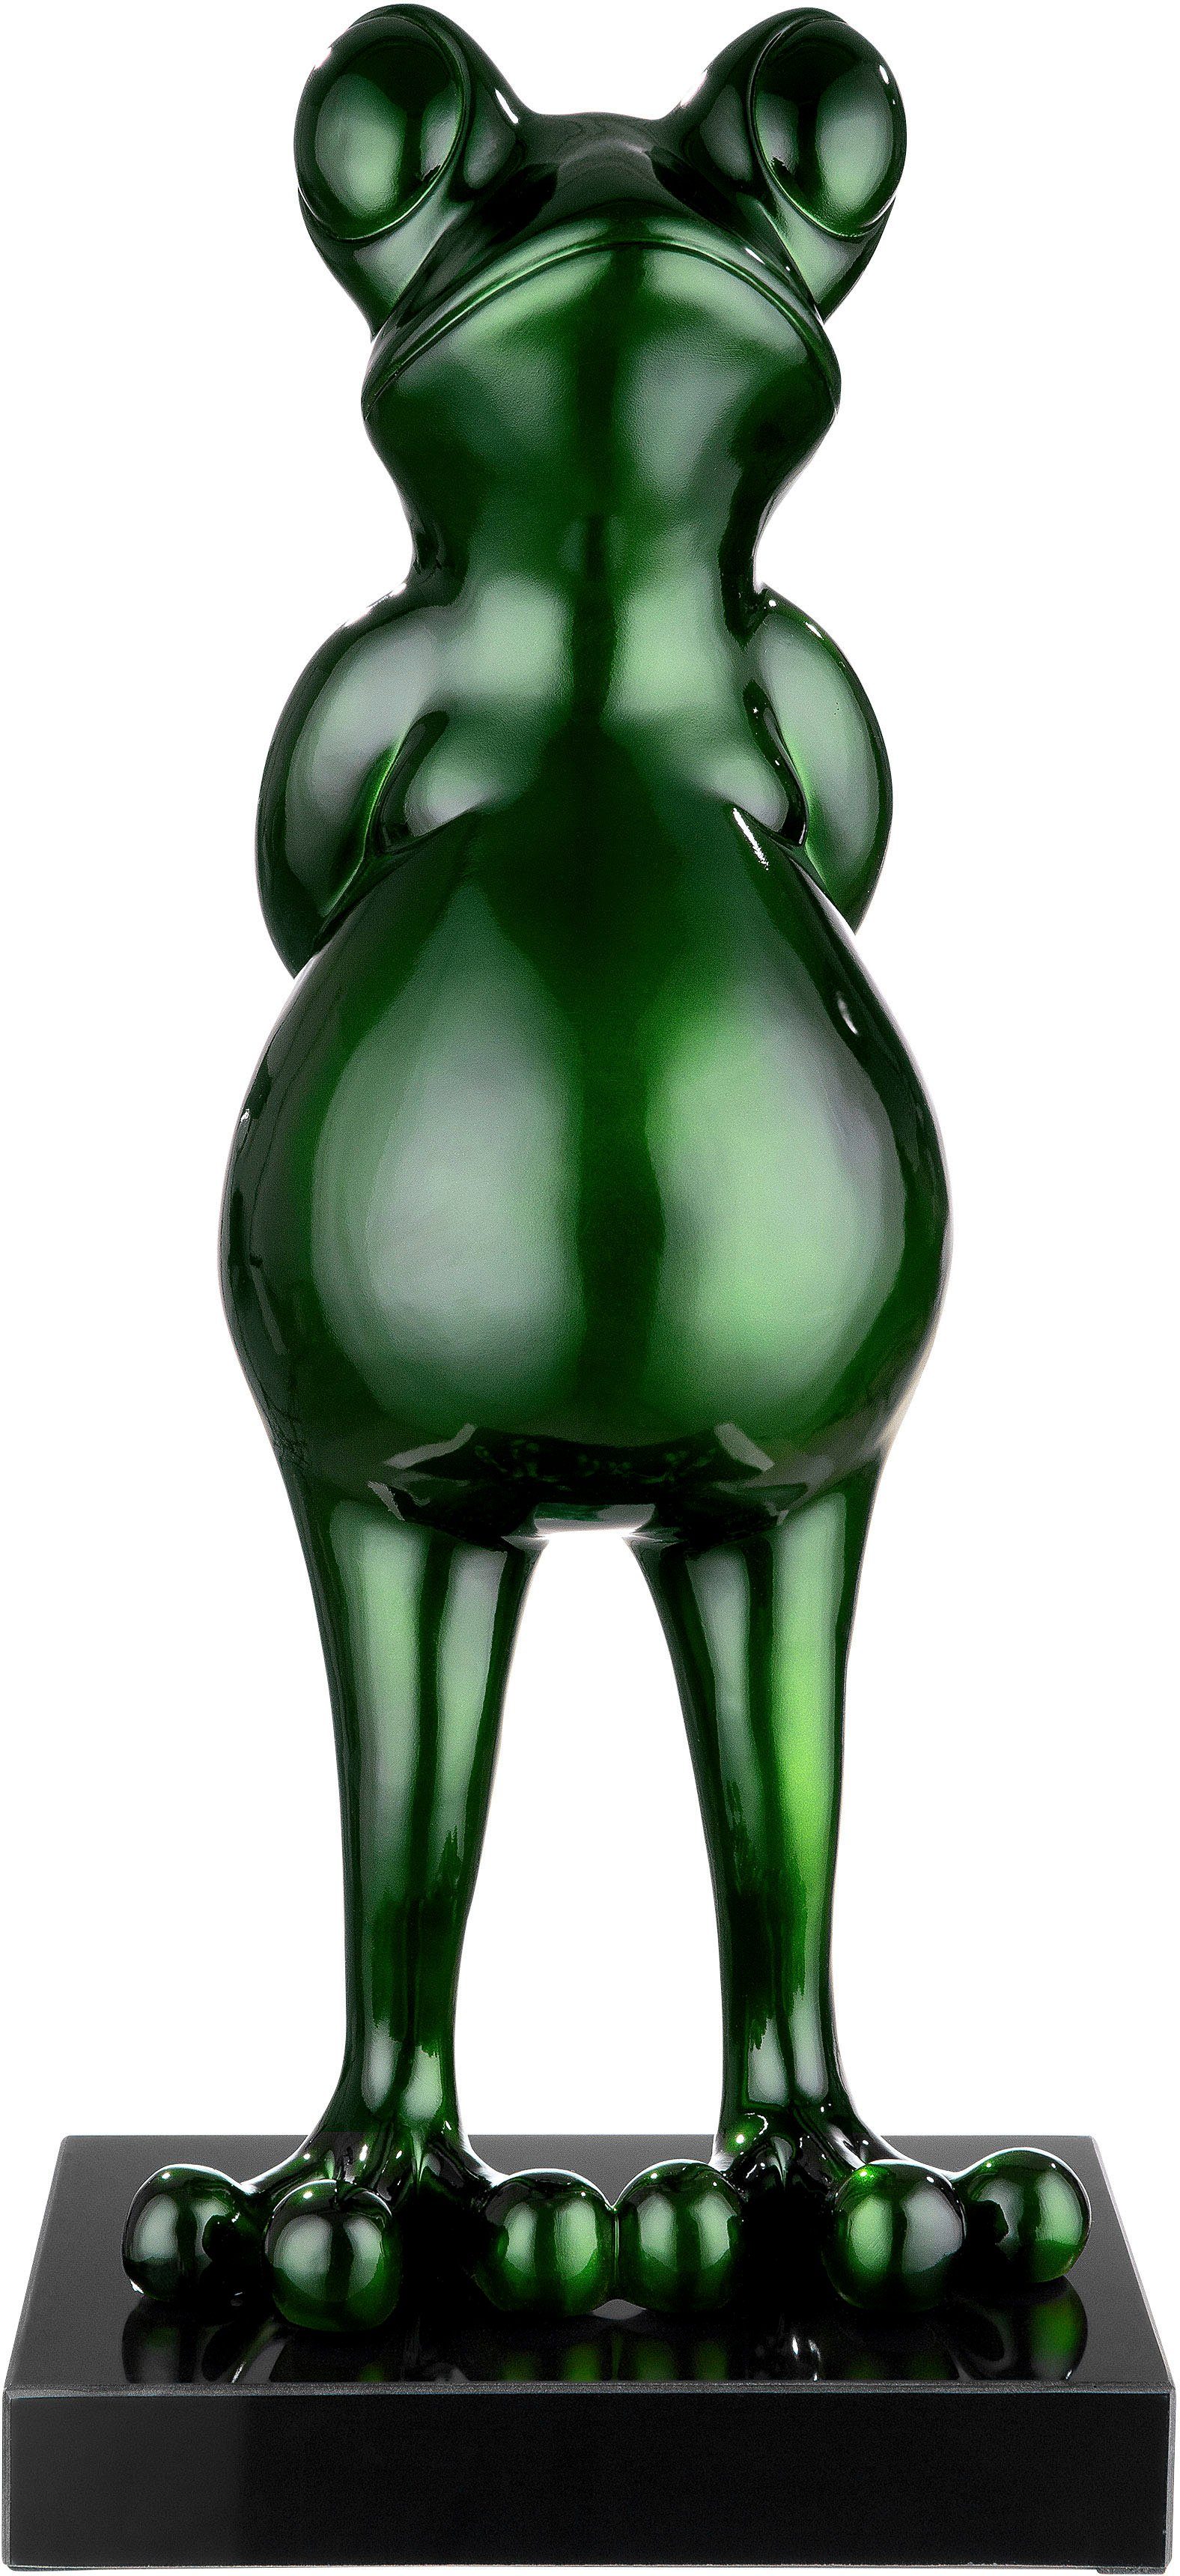 Casablanca by St), Tierfigur (1 Skulptur Frog grün Marmorbase Gilde auf